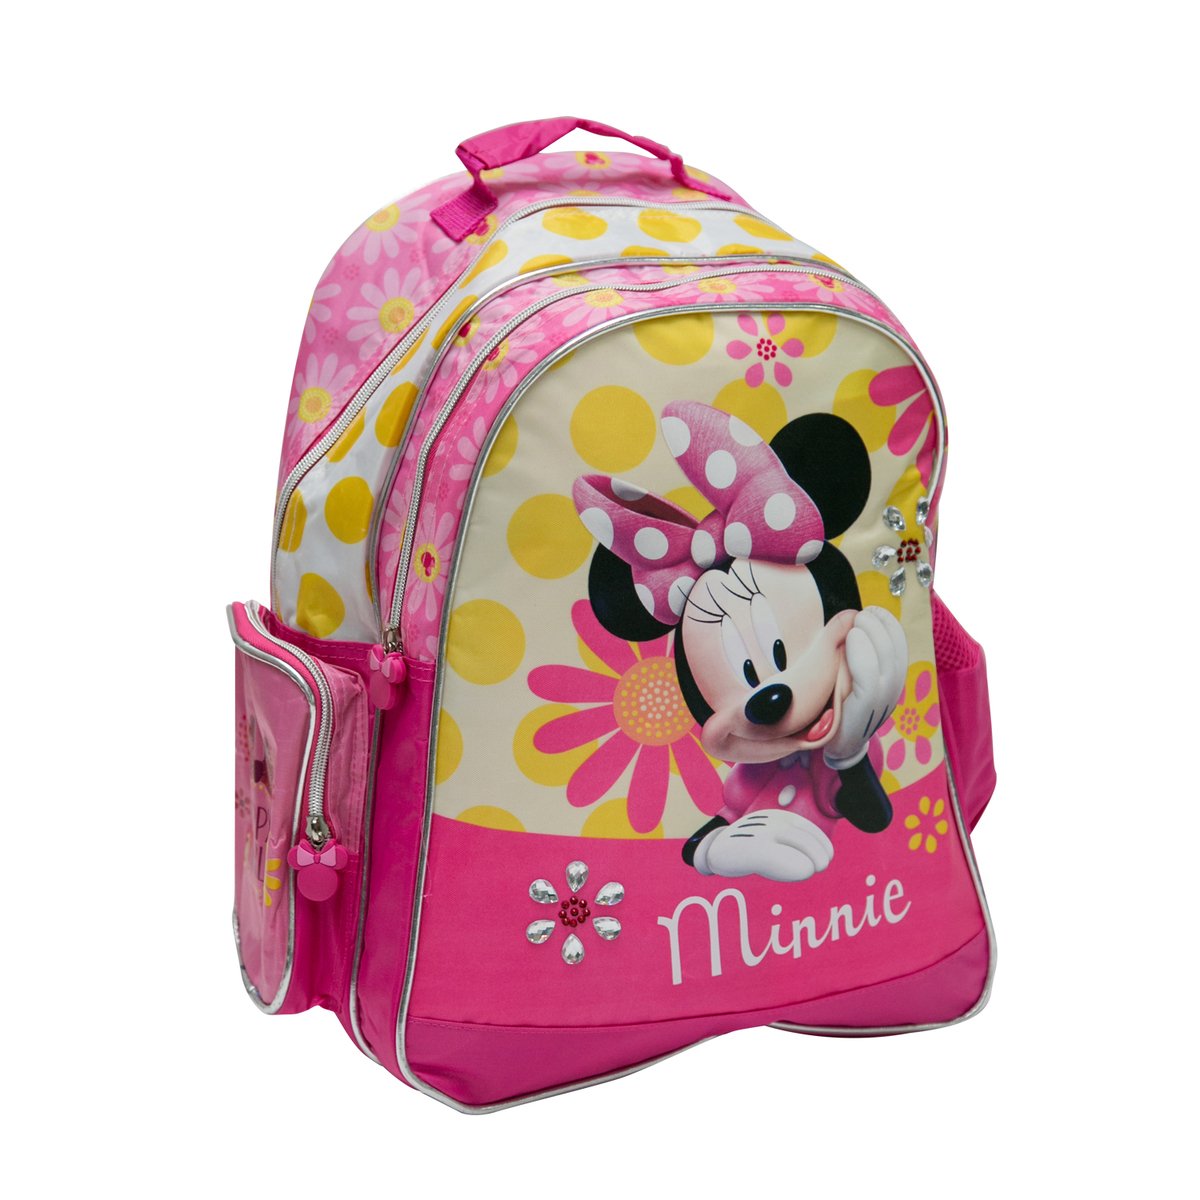 Minnie School Back Pack FK15019 16inch